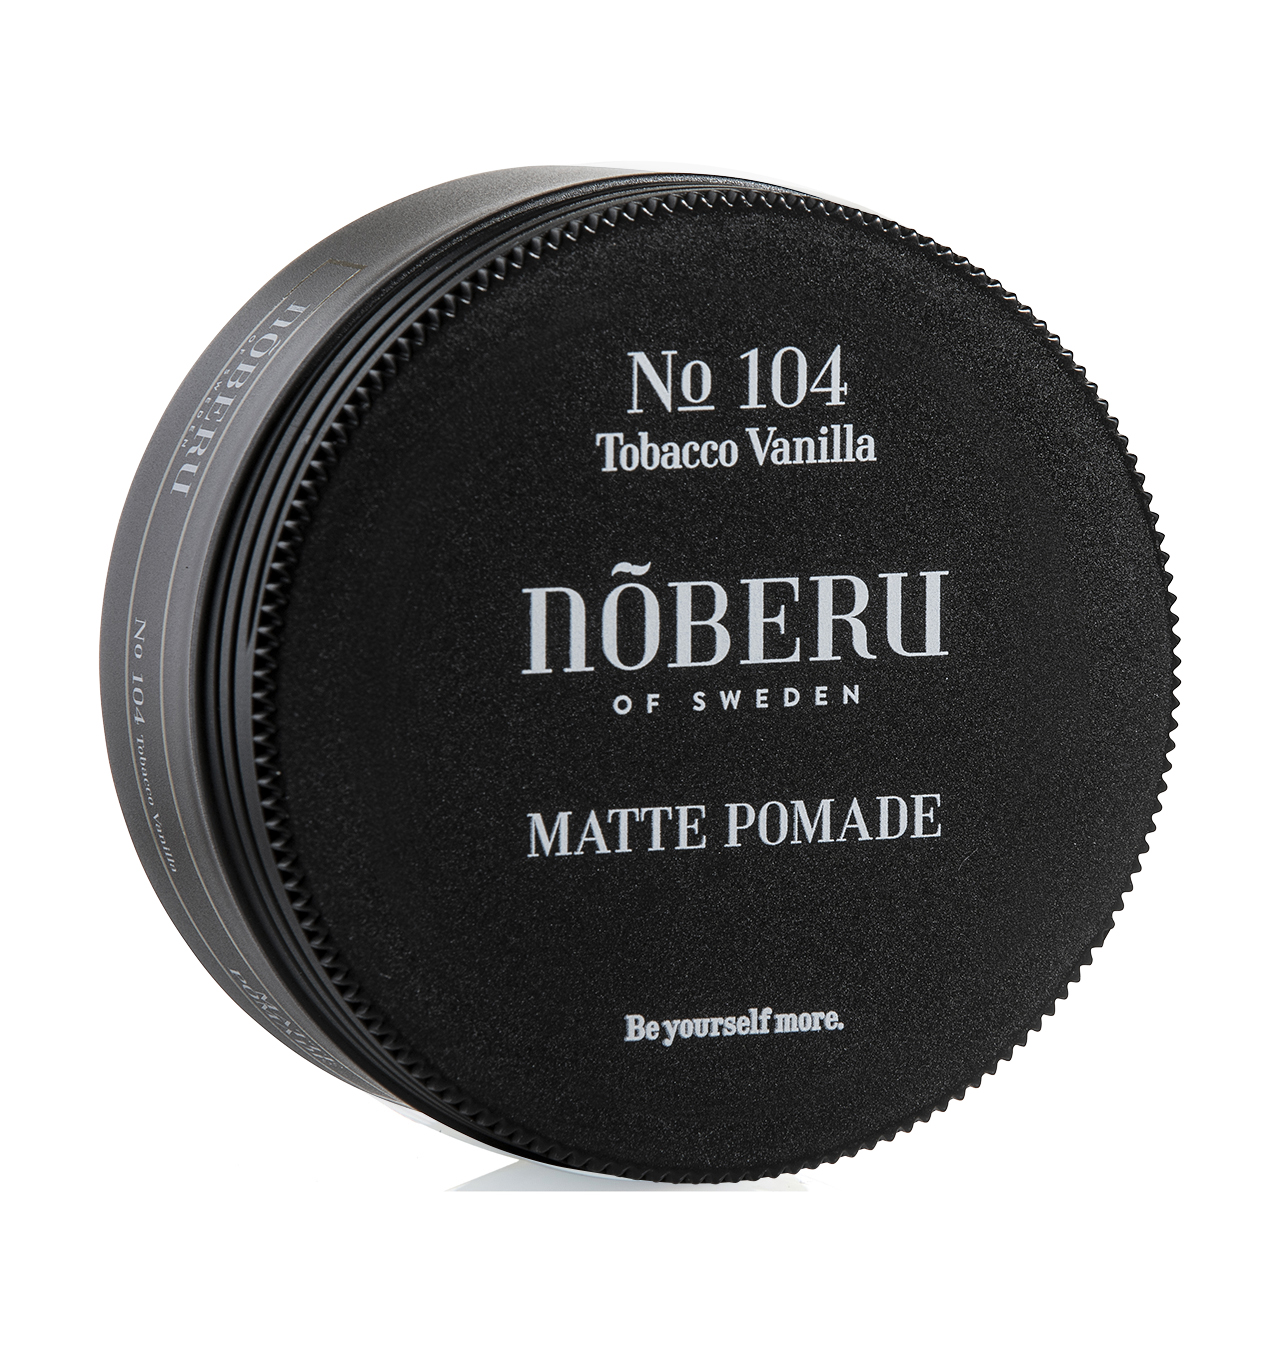 Nõberu - Matte Pomade Tobacco Vanilla - 80 ml